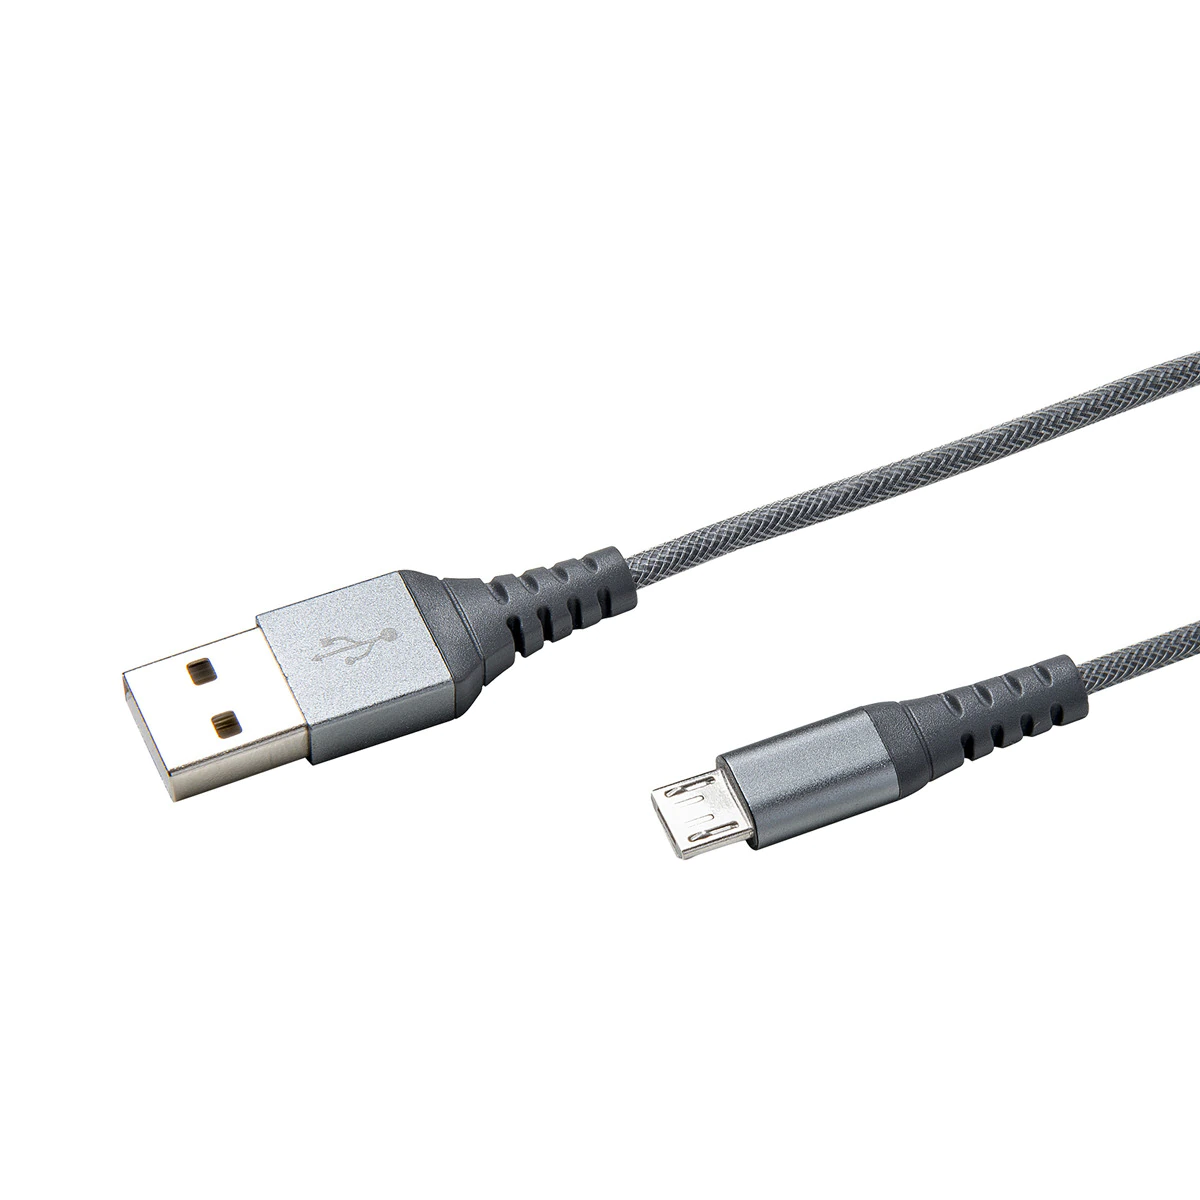 Cable Celly USB a Micro USB de Nylon plateado